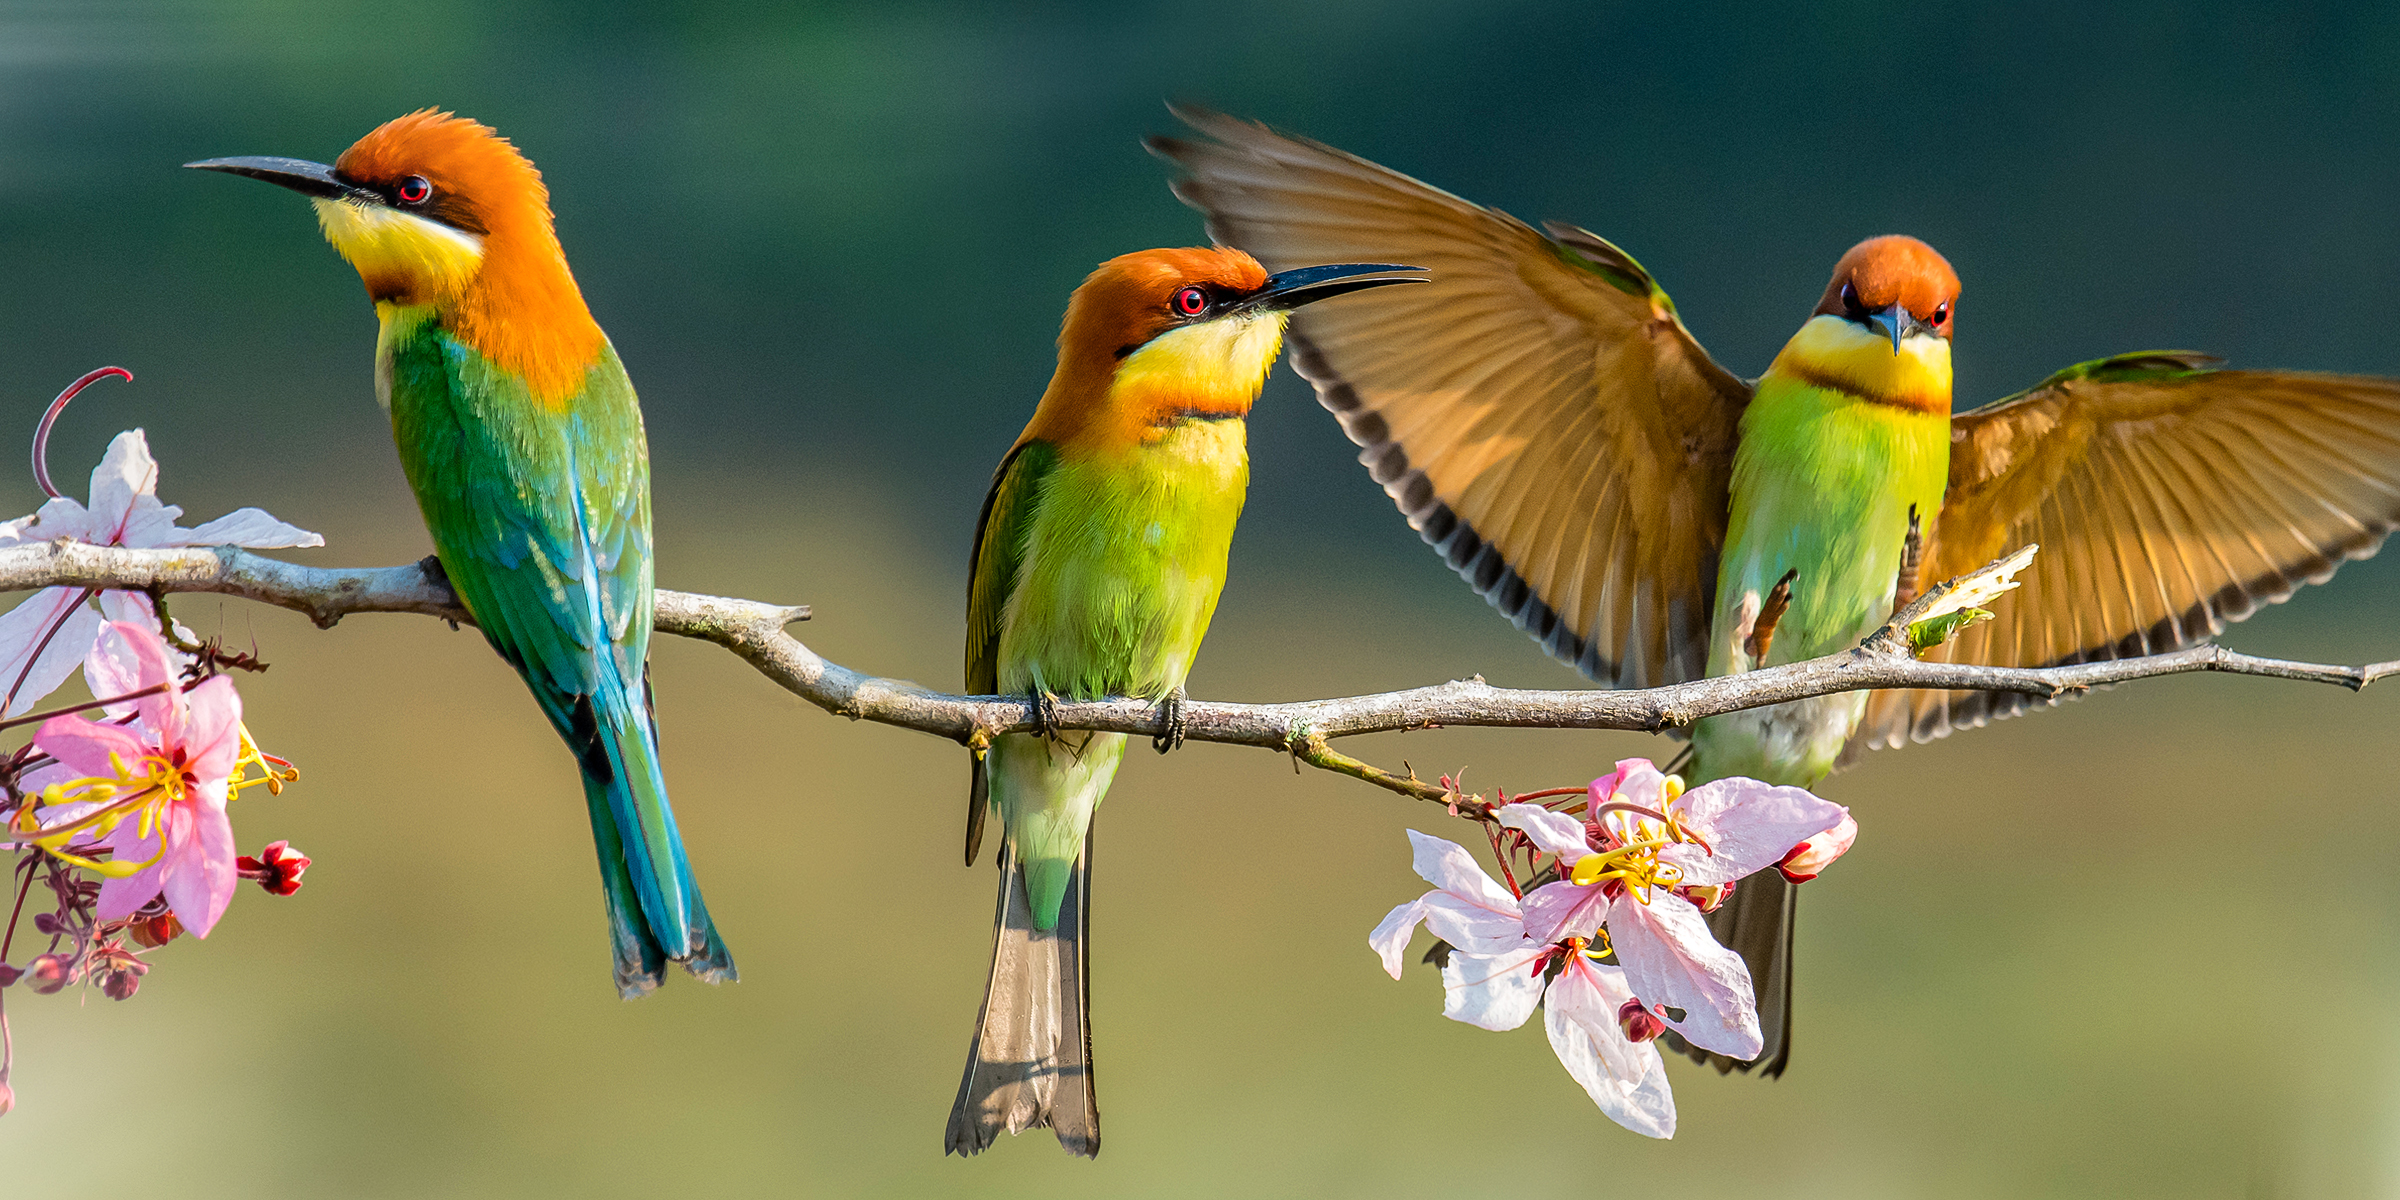 Three birds on a branch | Source: Shutterstock